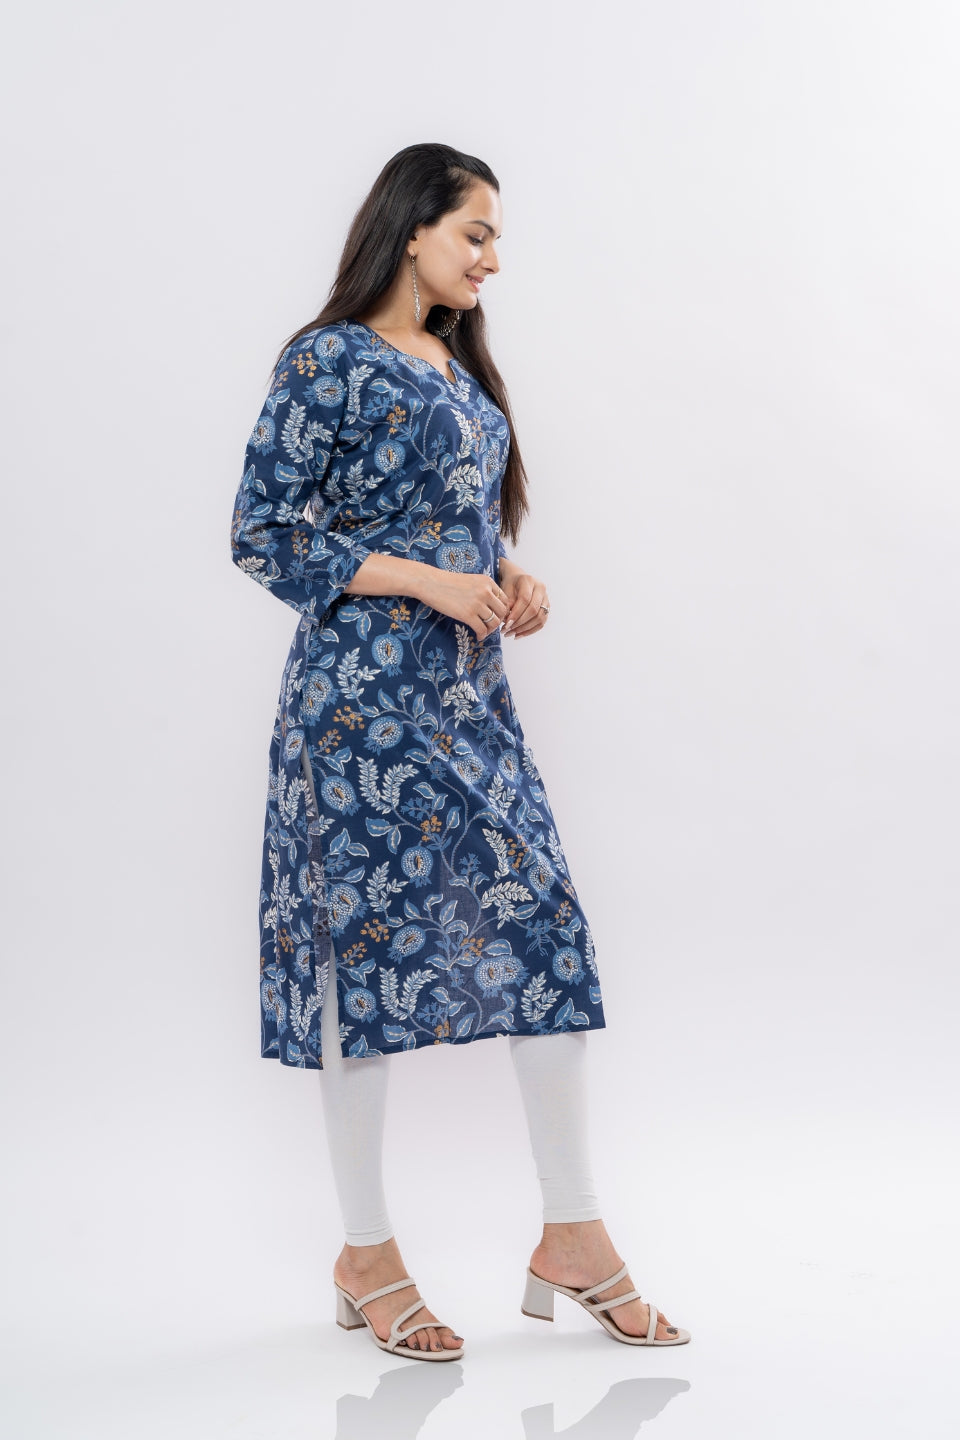 Ekisha women's cotton blue designer multicolor floral printed straight kurta kurti, side view 2